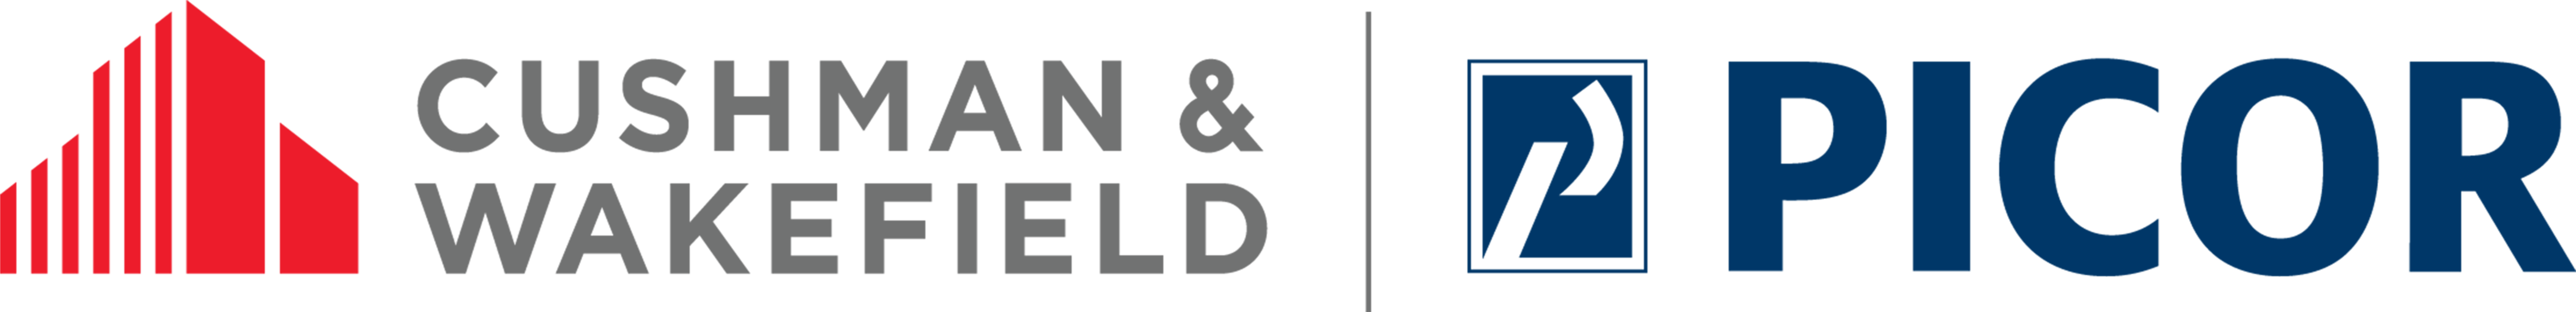 Cushman & Wakefield | PICOR logo